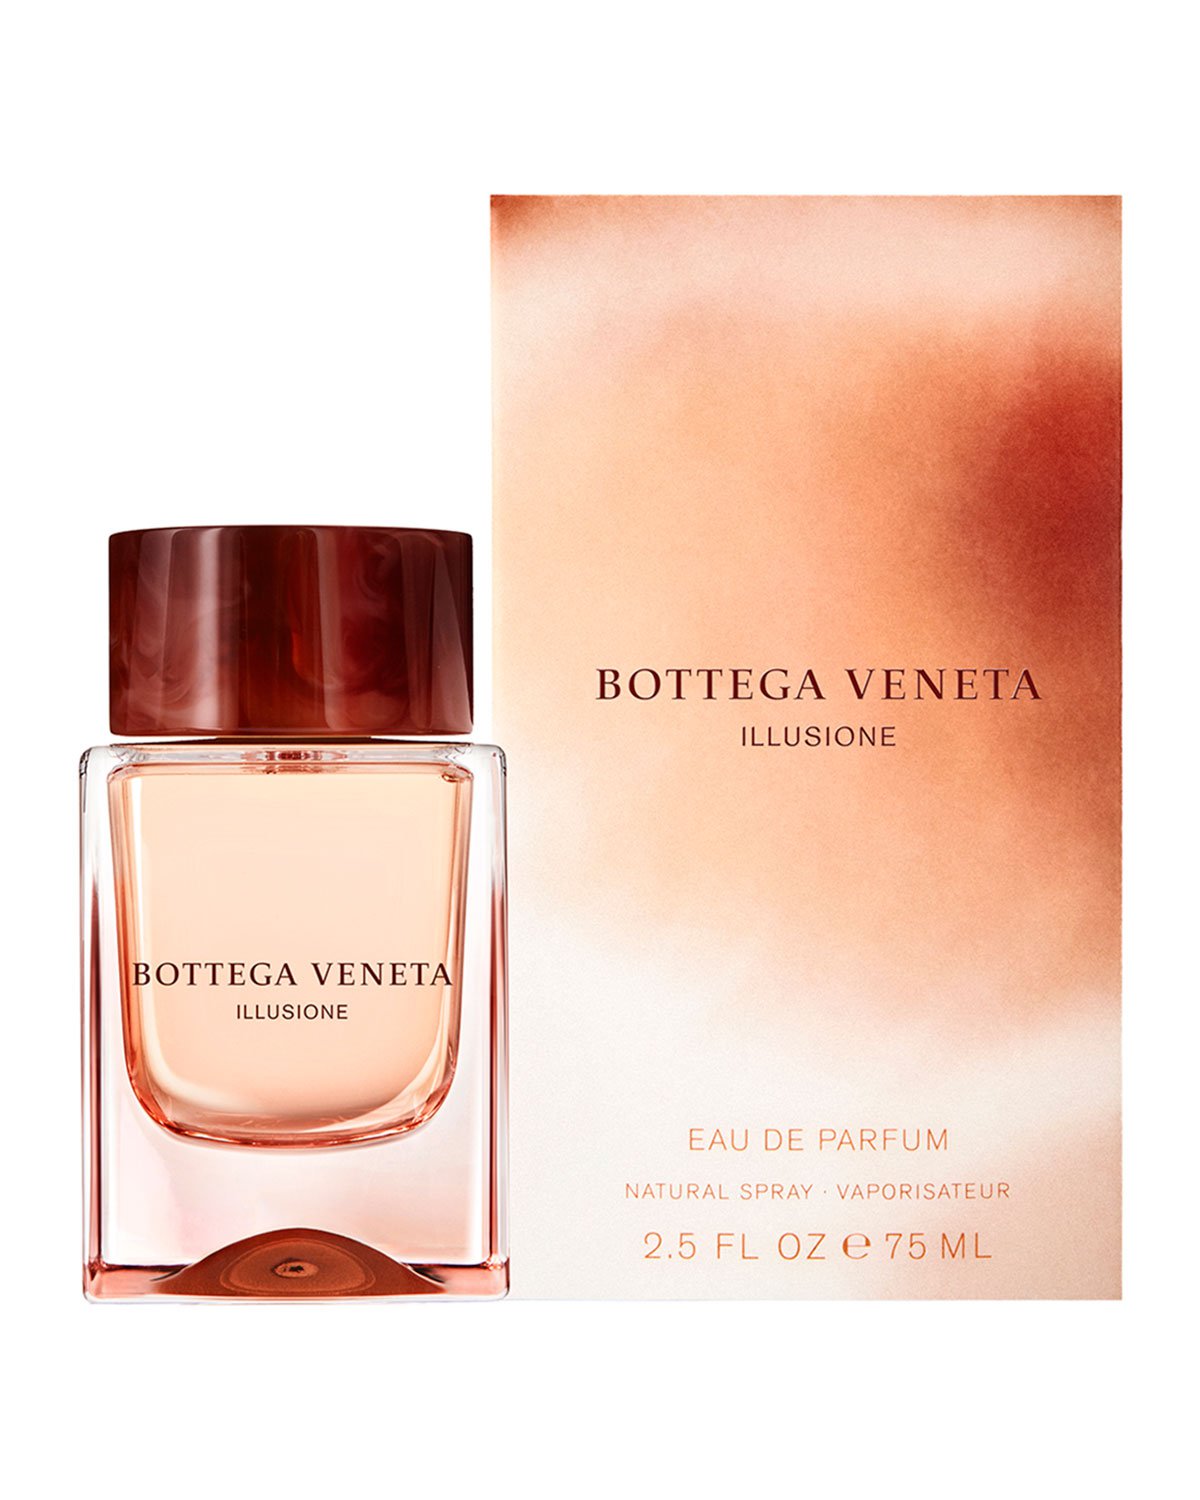 Bottega Veneta Illusione For Her Eau de Parfum 2.5 oz Spray.